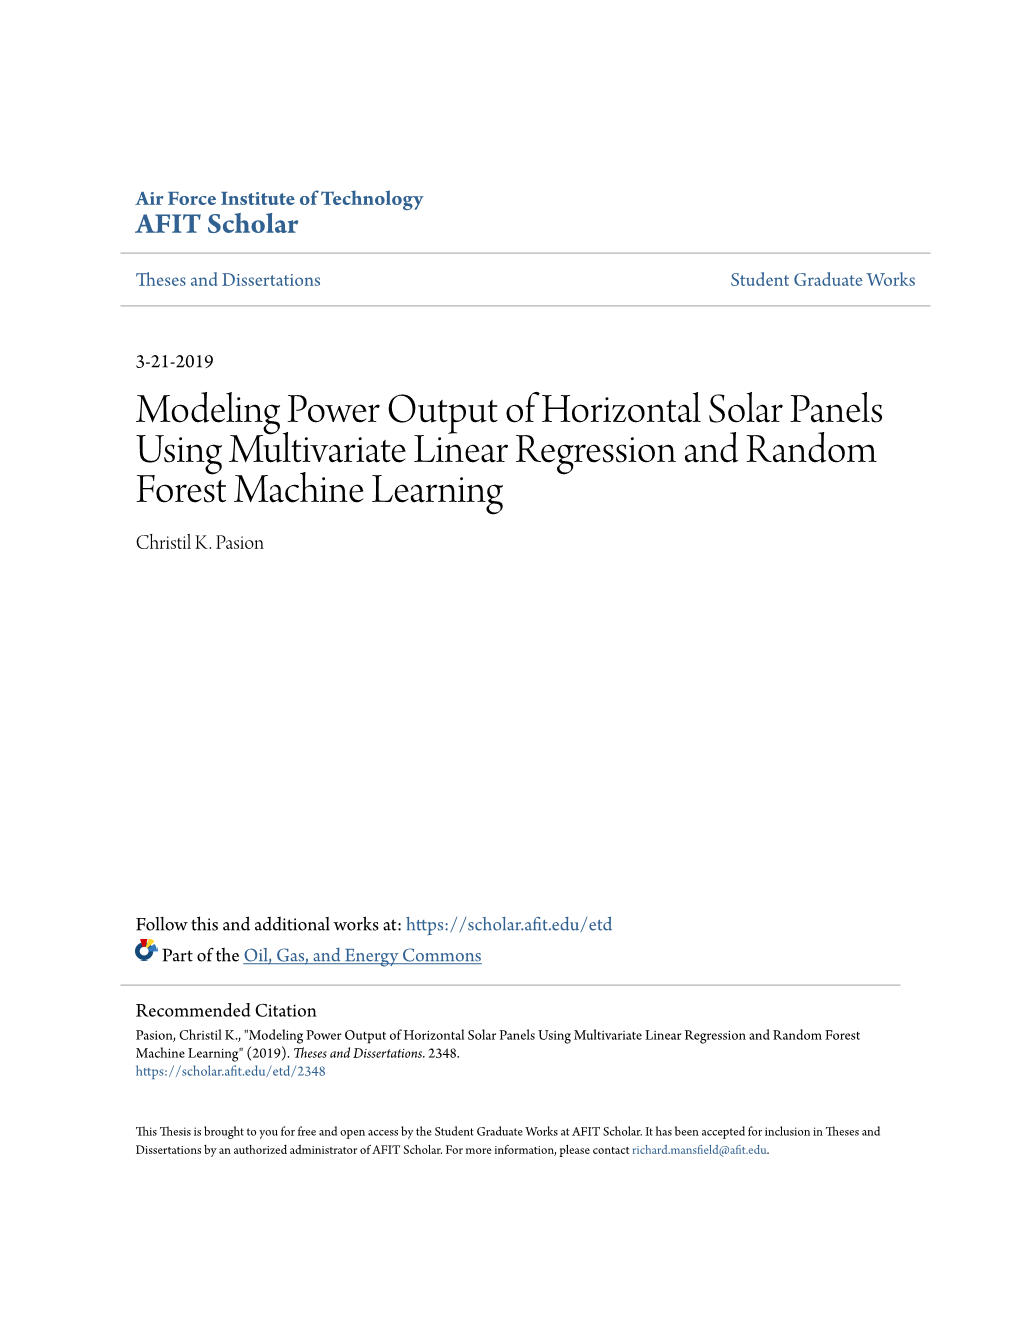 Modeling Power Output of Horizontal Solar Panels Using Multivariate Linear Regression and Random Forest Machine Learning Christil K